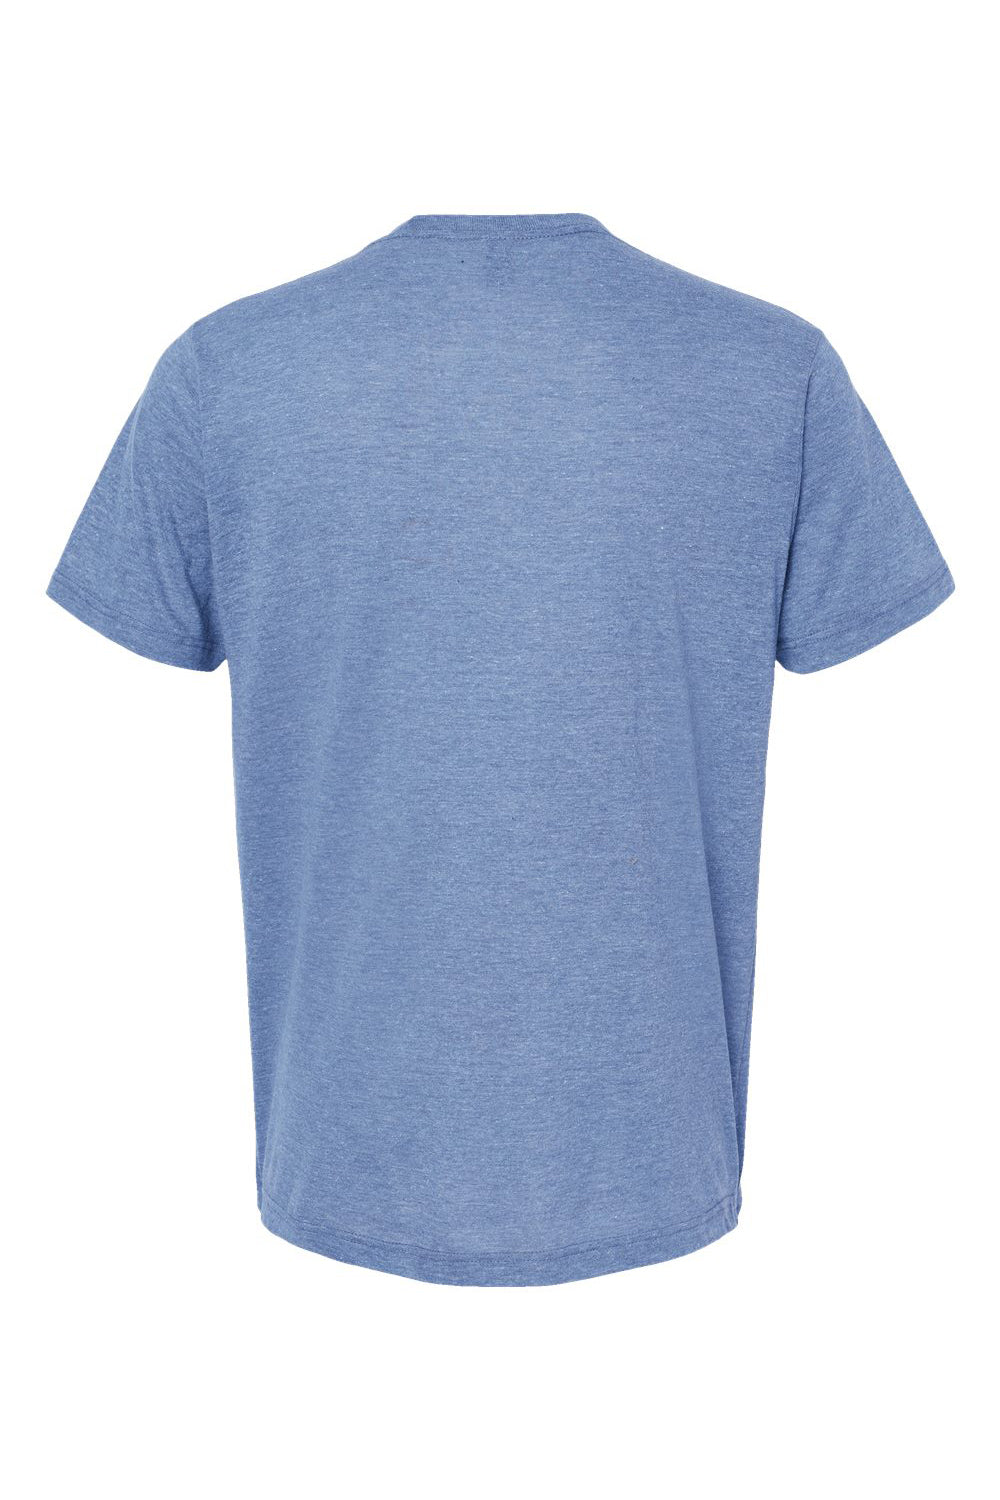 Tultex 254 Mens Short Sleeve Crewneck T-Shirt Athletic Blue Flat Back